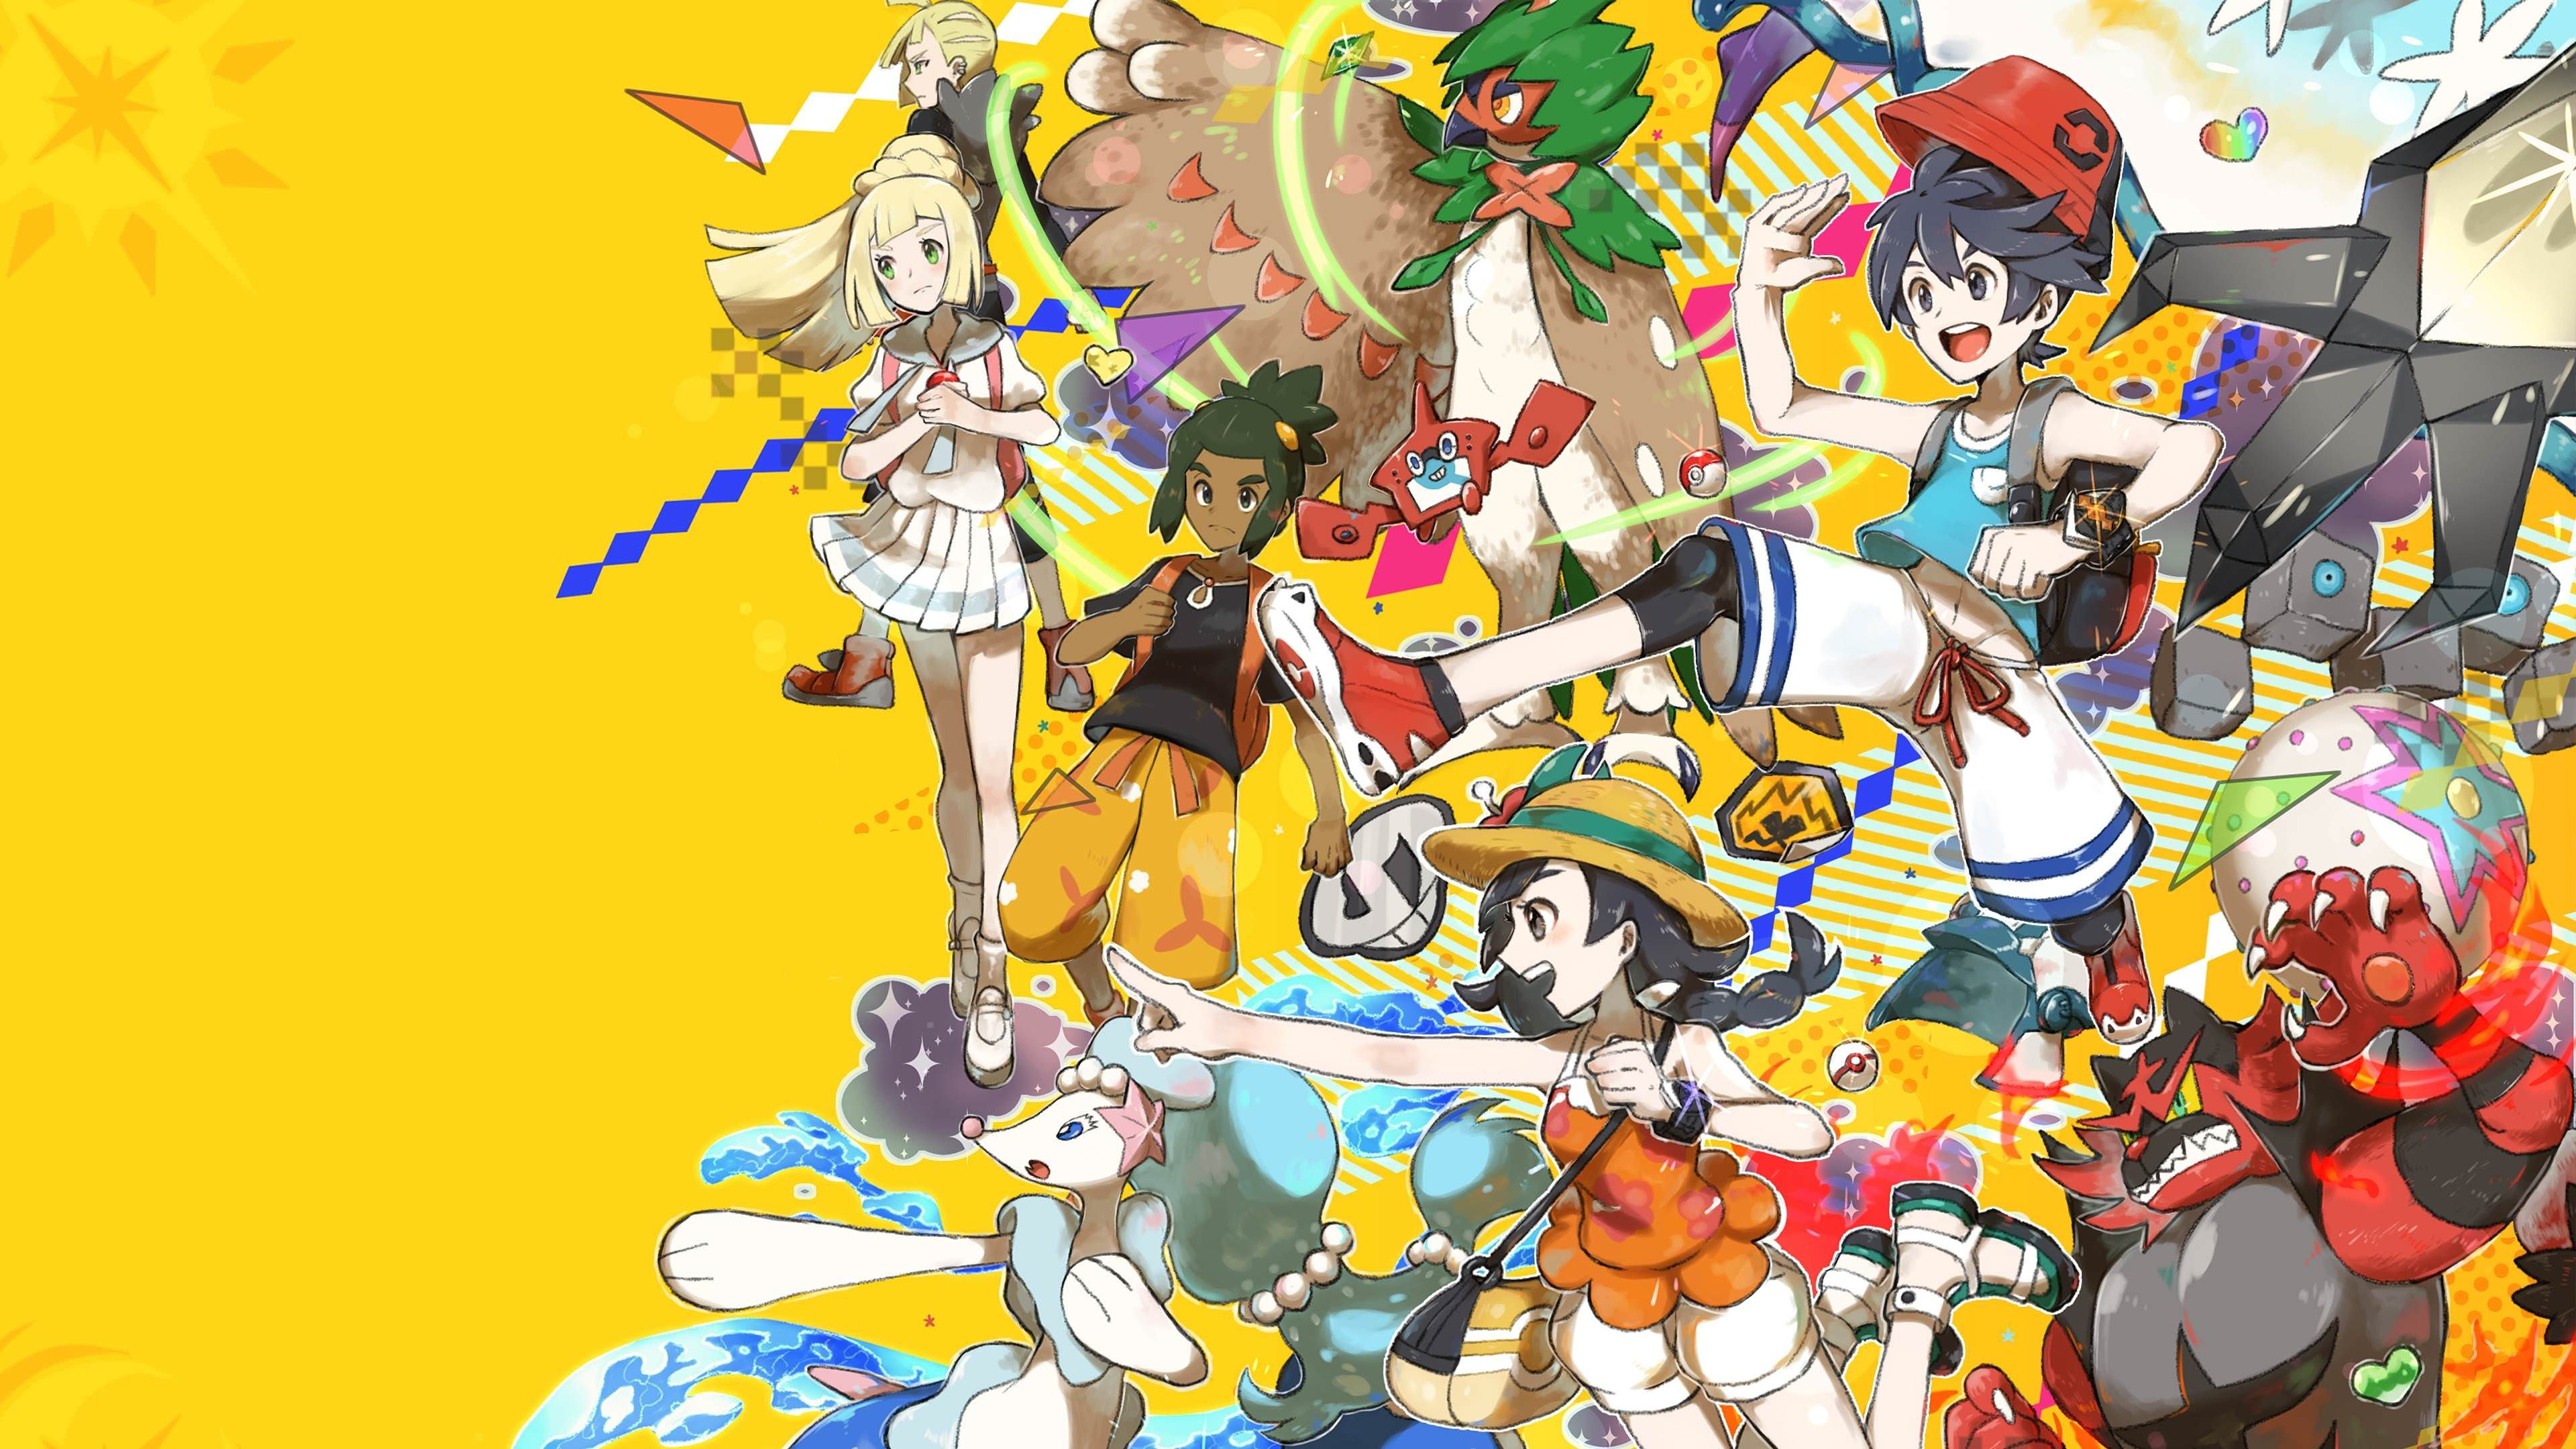 3840x2160 Pokemon Sun and Moon Wallpapers Top Free Pokemon Sun and Moon Backgrounds | Pokemon sun, Pokemon, Pokemon m